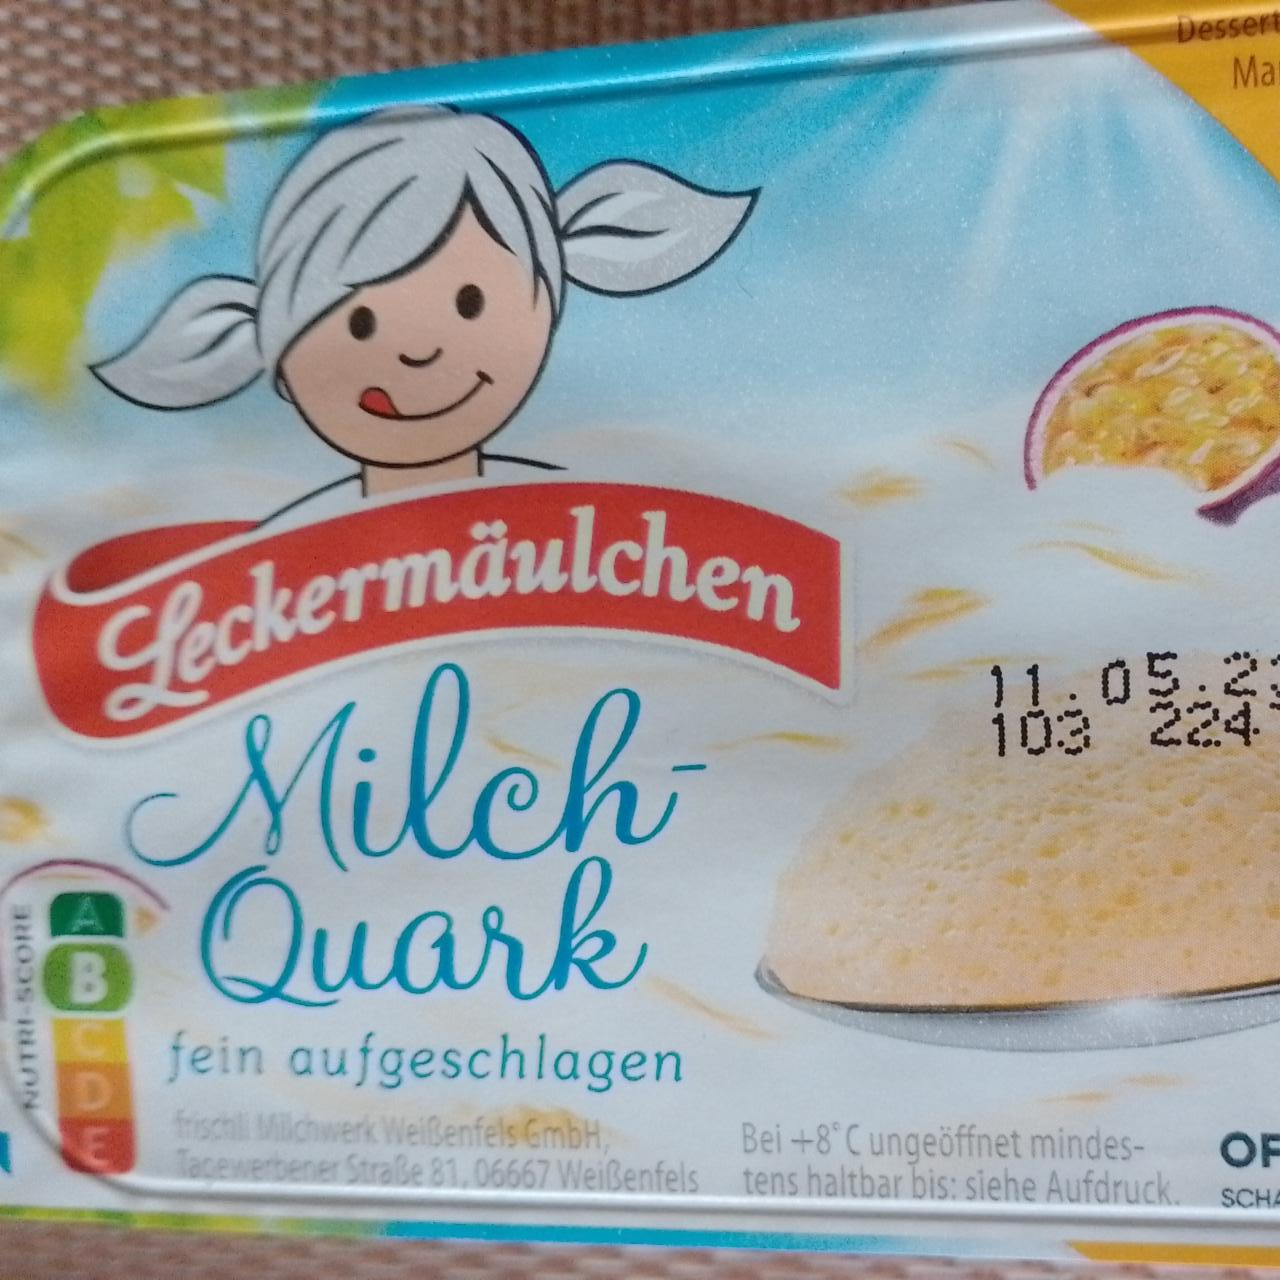 Фото - кисломолочный продукт кварк маракуйя Leckermäulchen